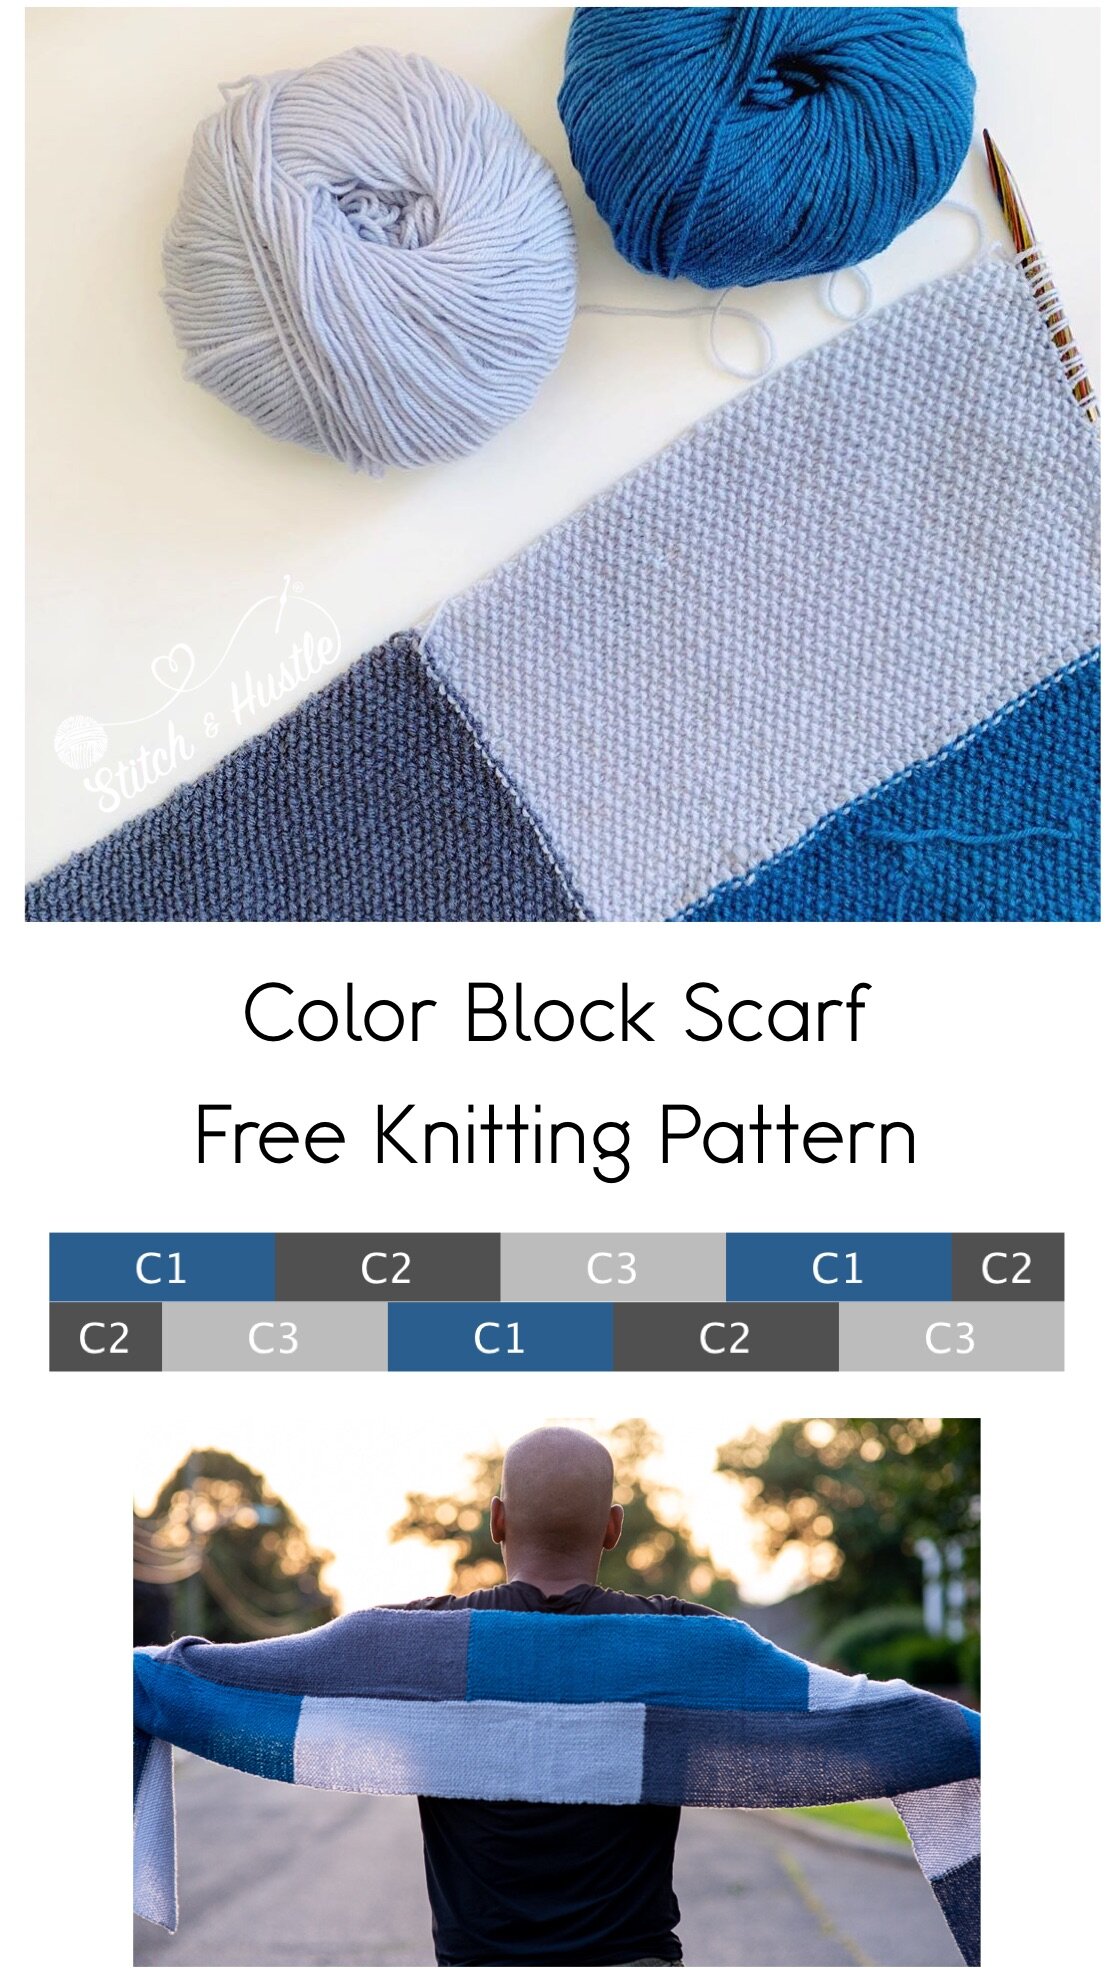 Knit design patterns